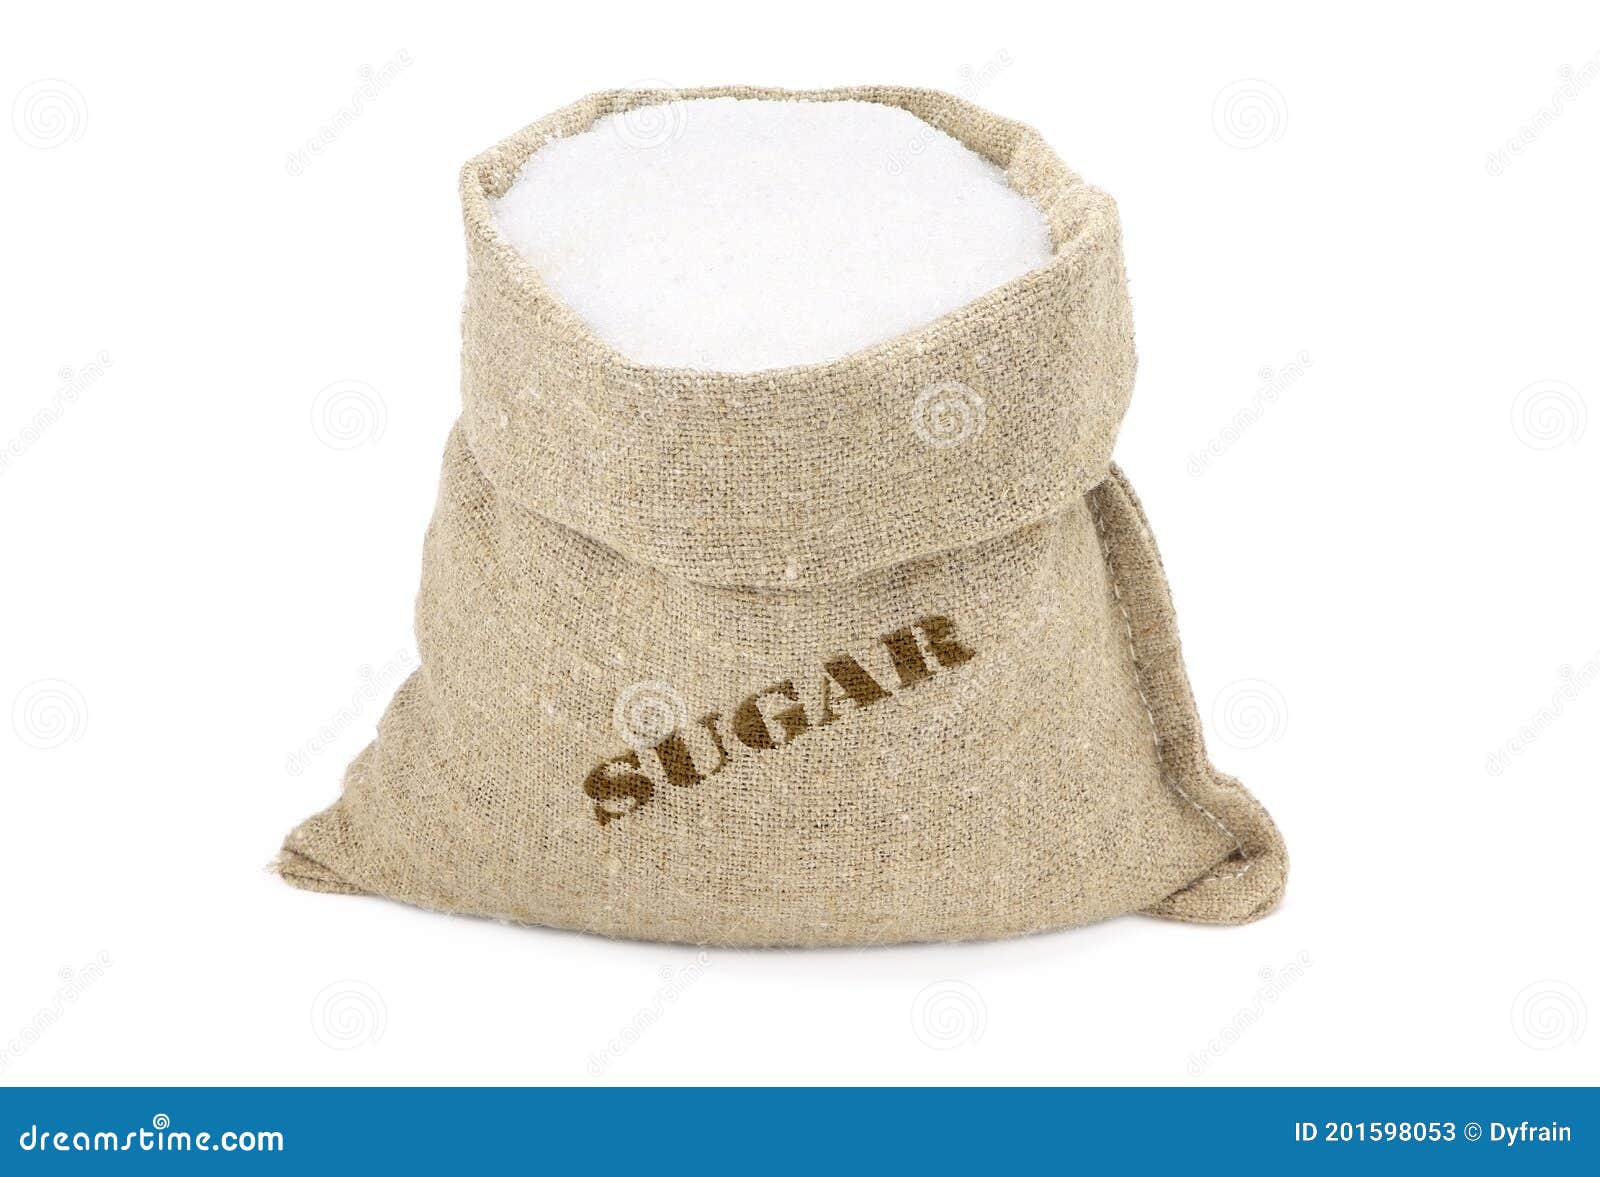 Sugar Bags at Latest Price in Noida  ManufacturerSupplierDelhiNCR